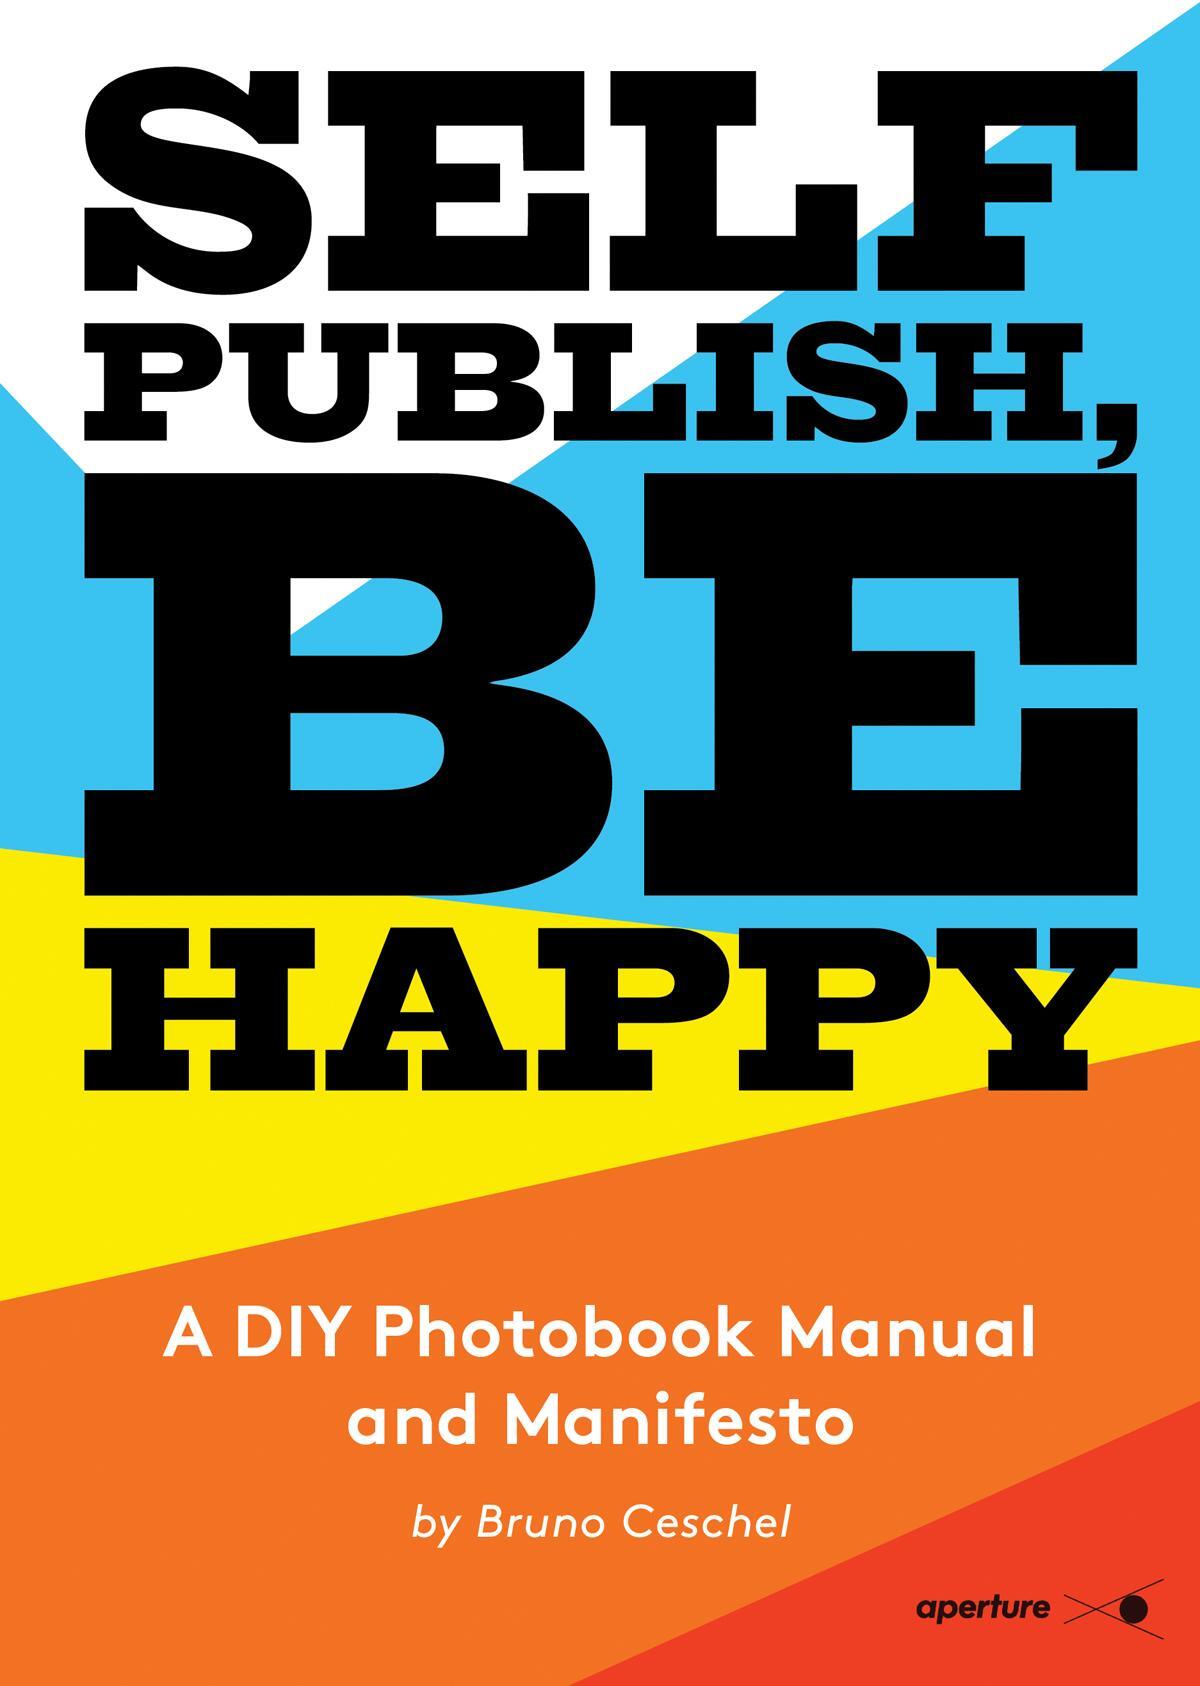 Self Publish, Be Happy. A DIY Photobook Manual and Manifesto